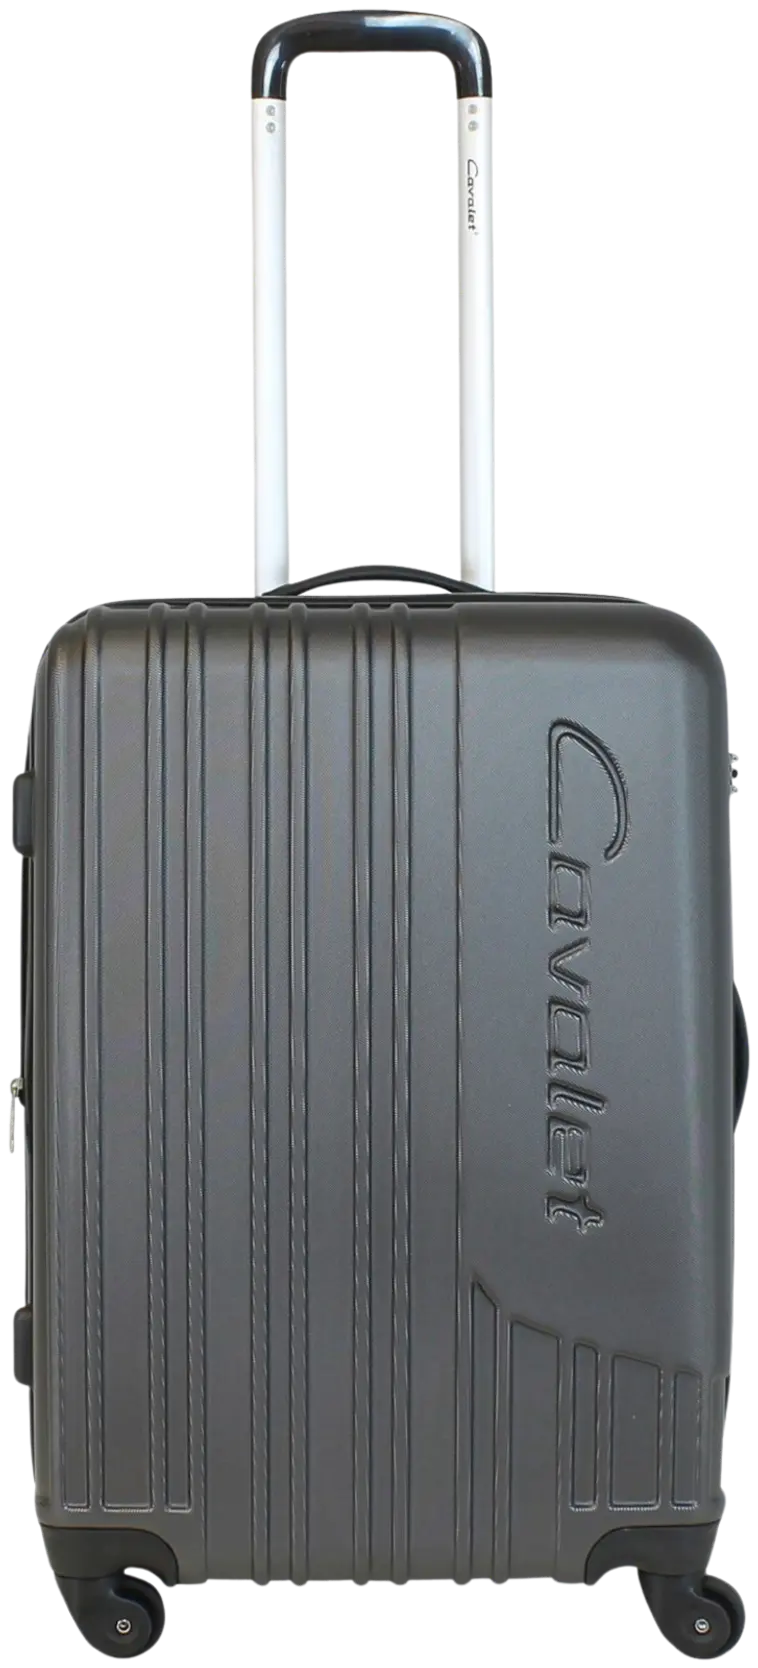 Cavalet Malibu matkalaukku L 73 cm, tummanharmaa - 1